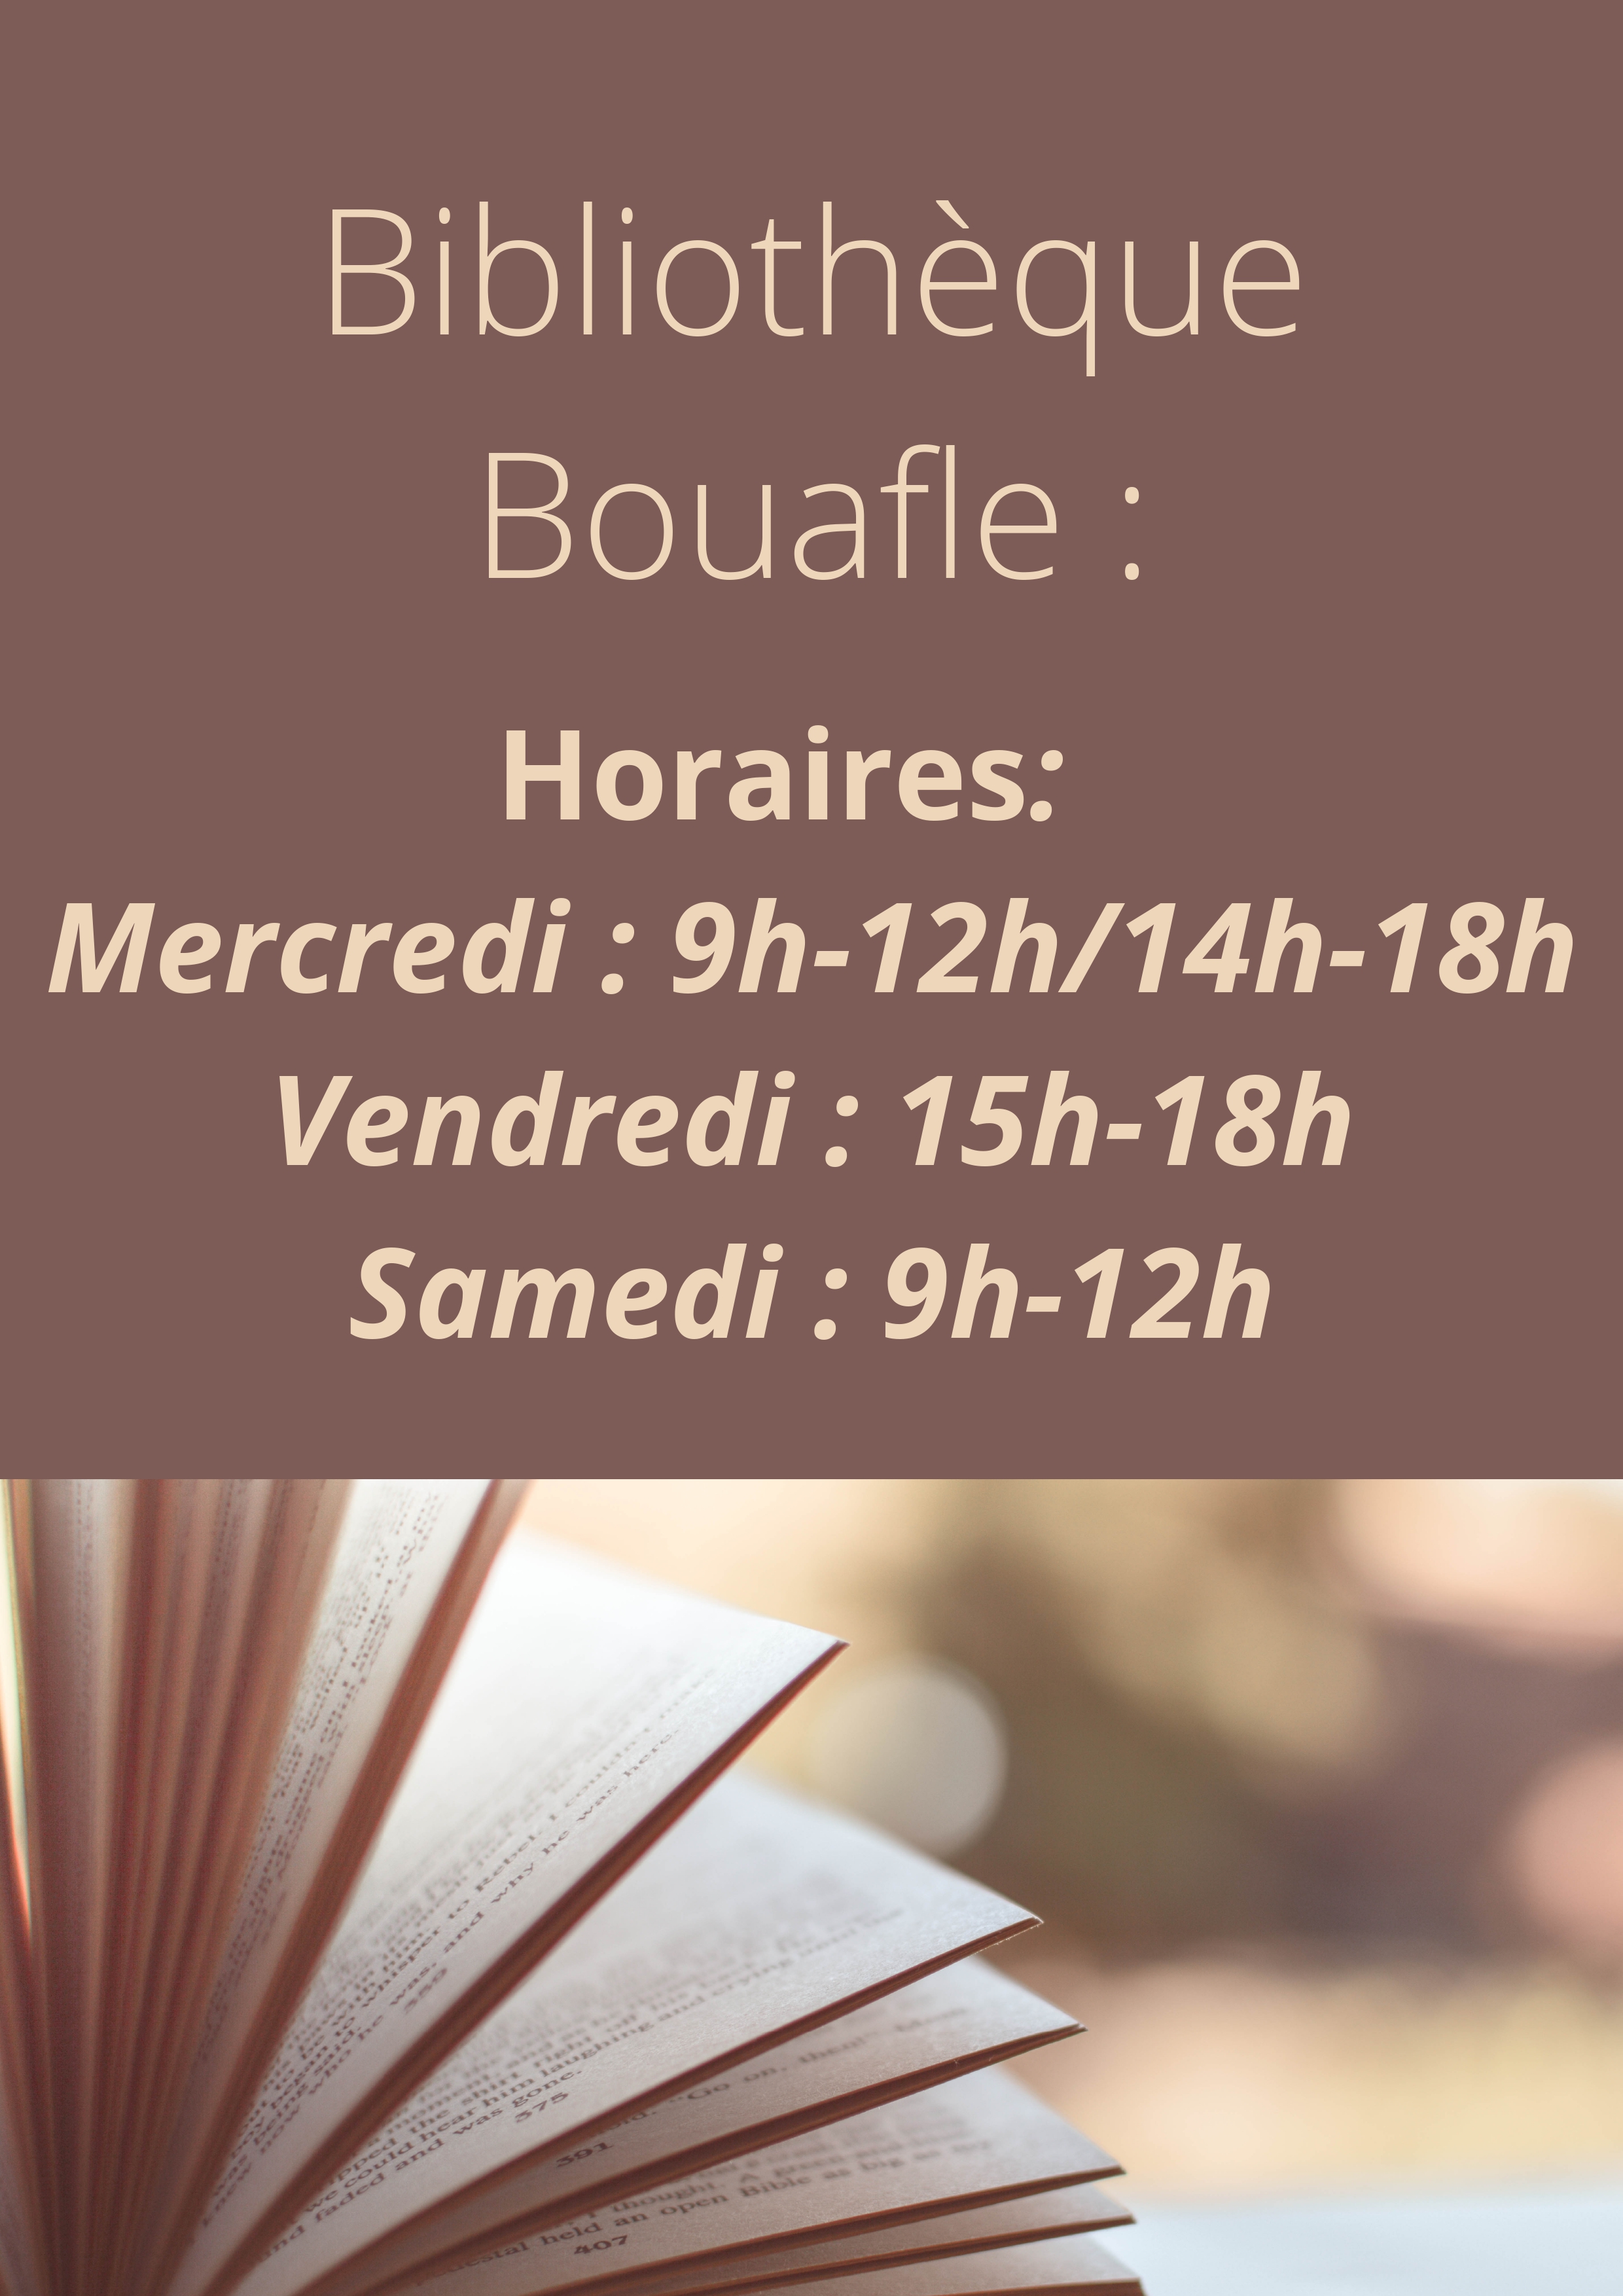 Bibliothèque Bouafle _3__page-0001.jpg